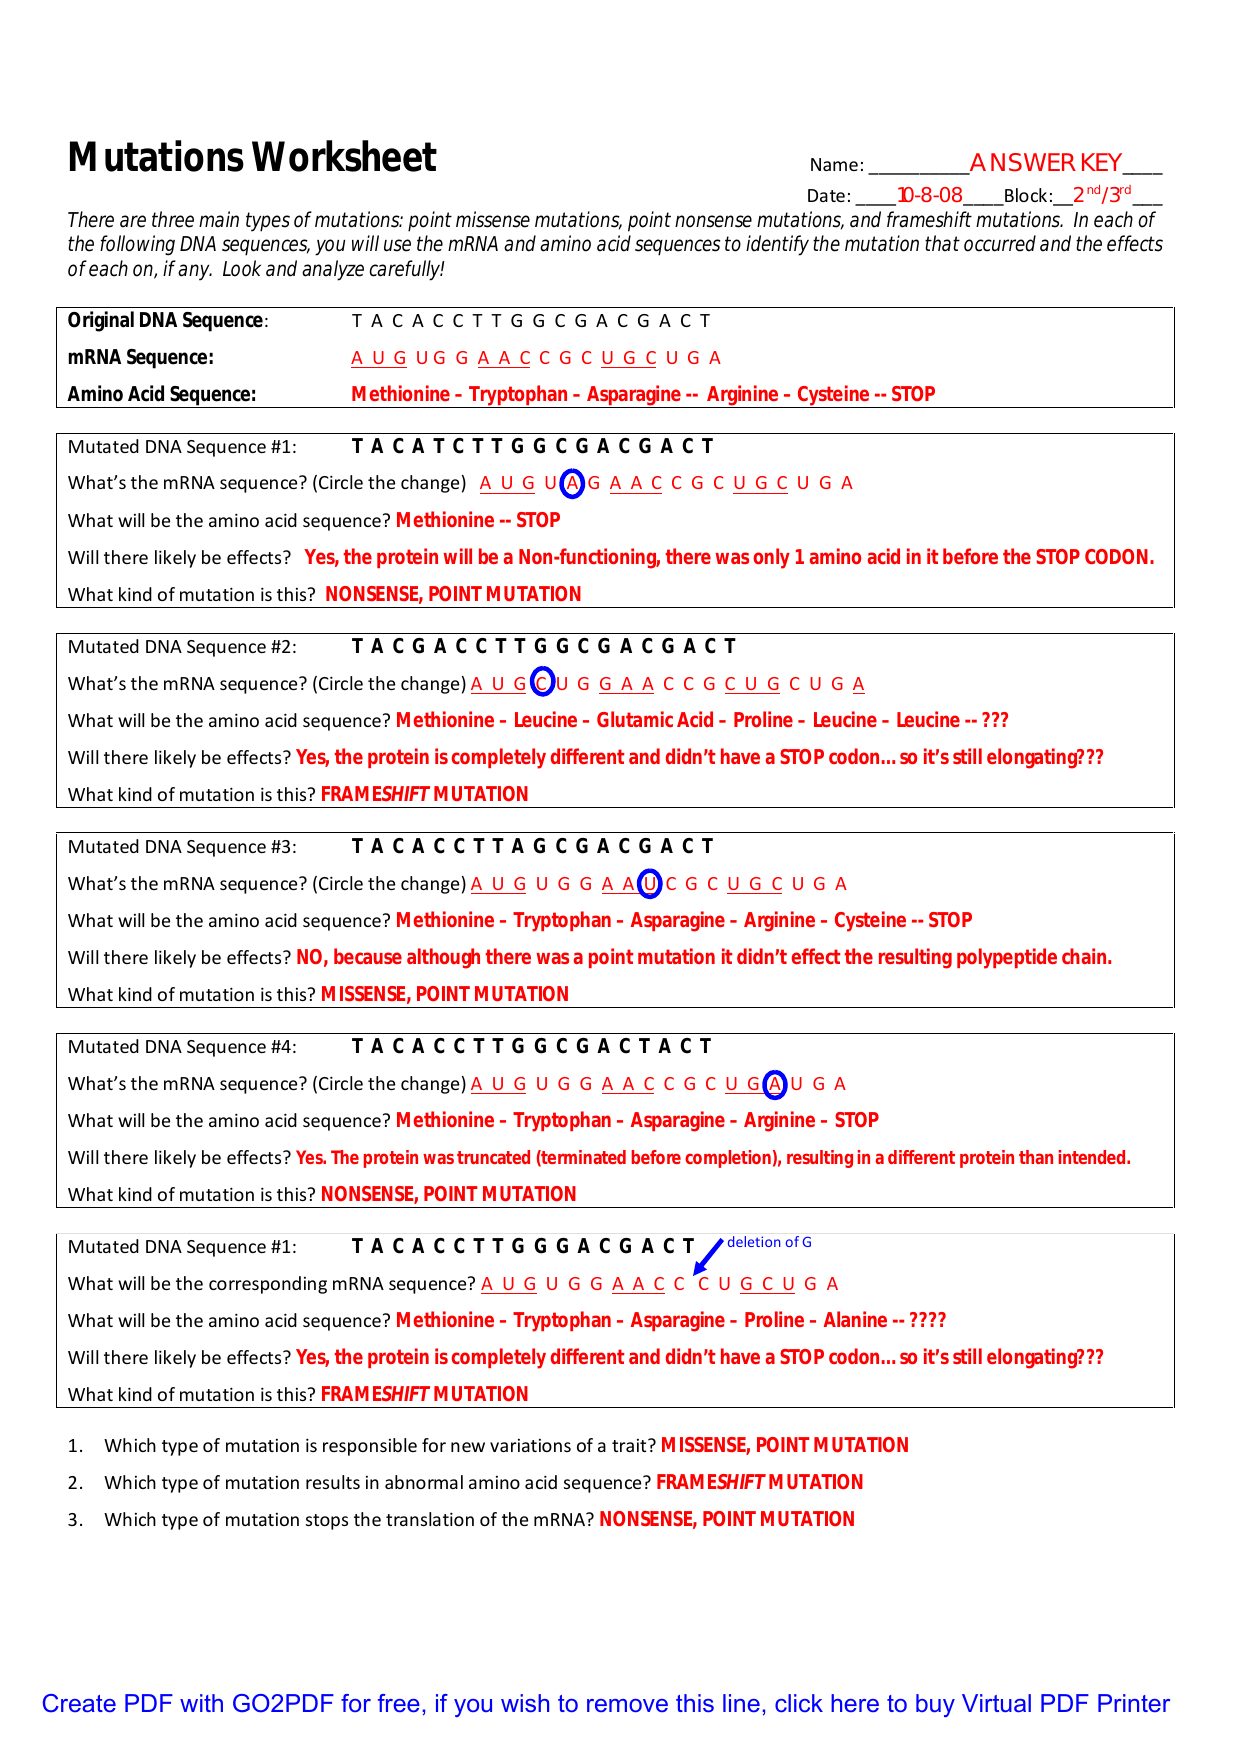 Mutations Worksheet With Mutations Worksheet Answer Key